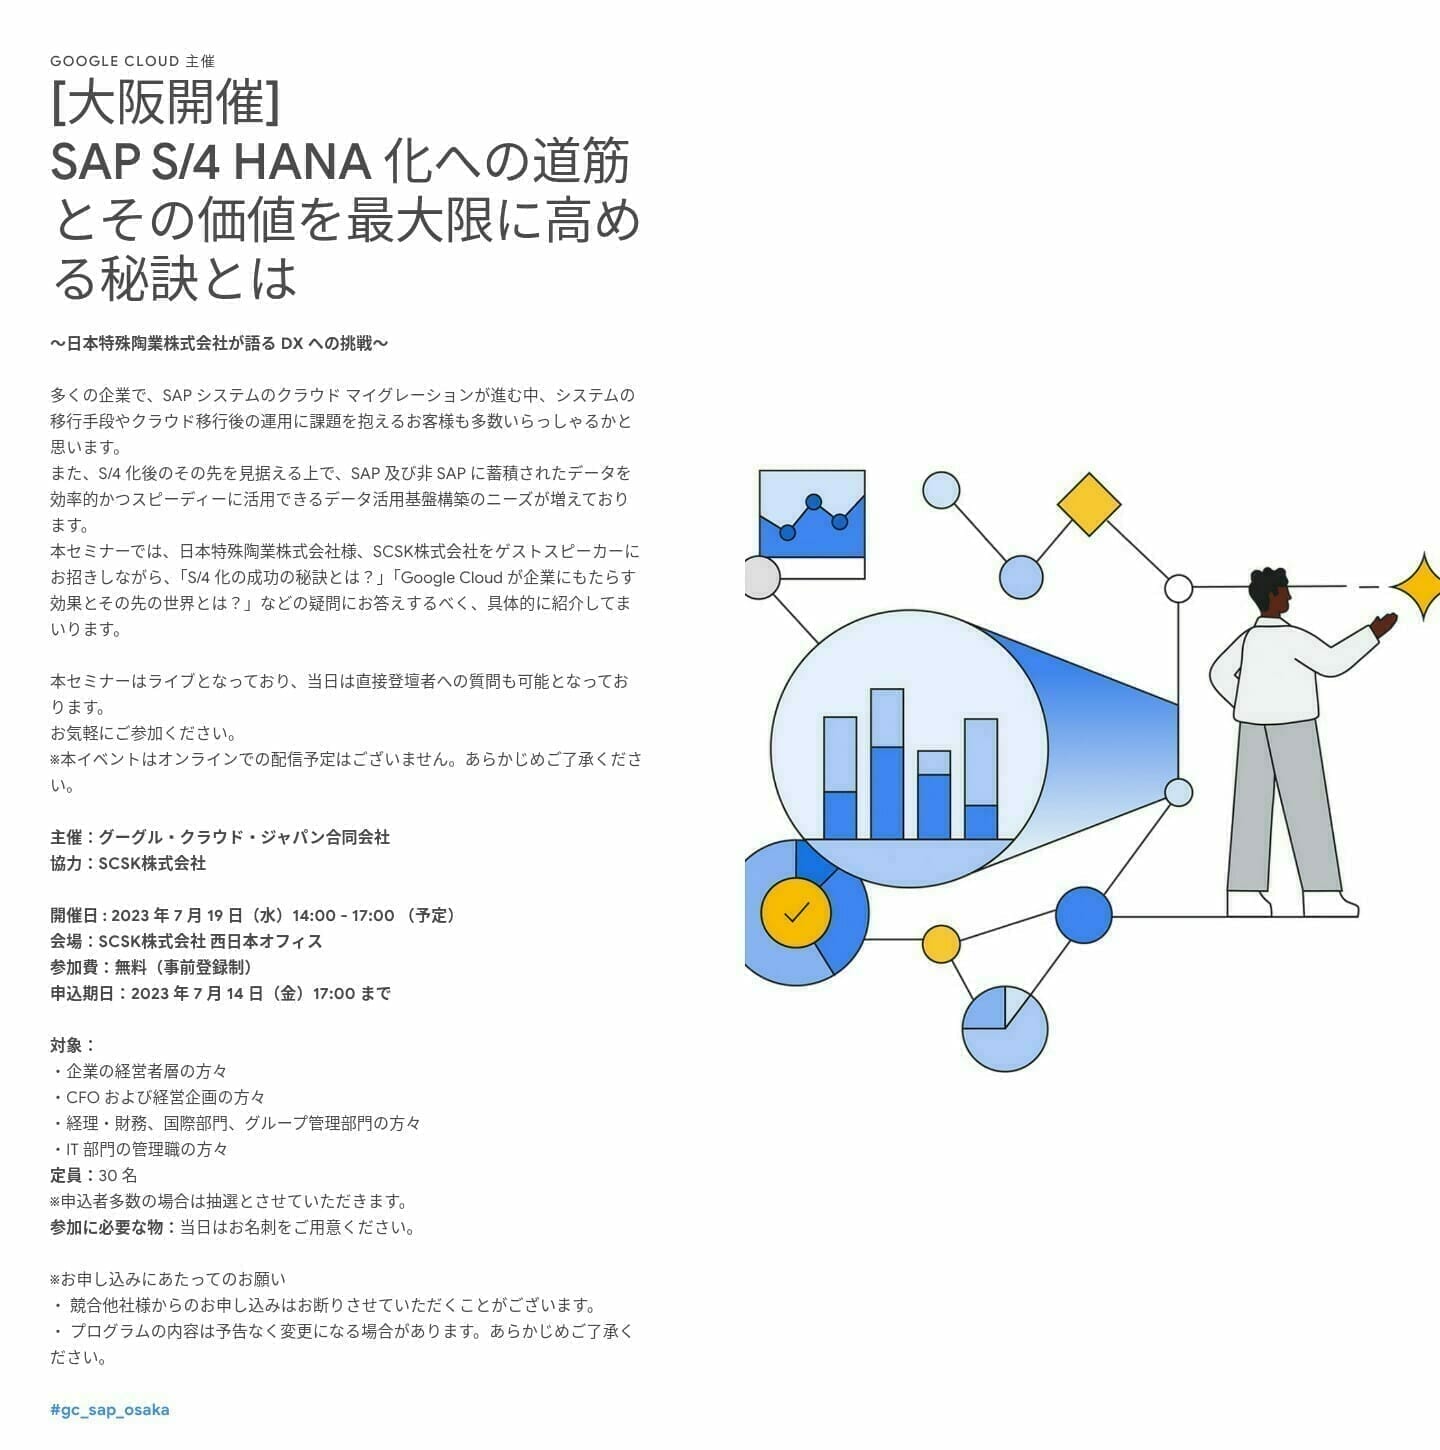 [Google Cloud] SAP S/4 HANA 化への道筋とその価値を最大限に高める秘訣とは